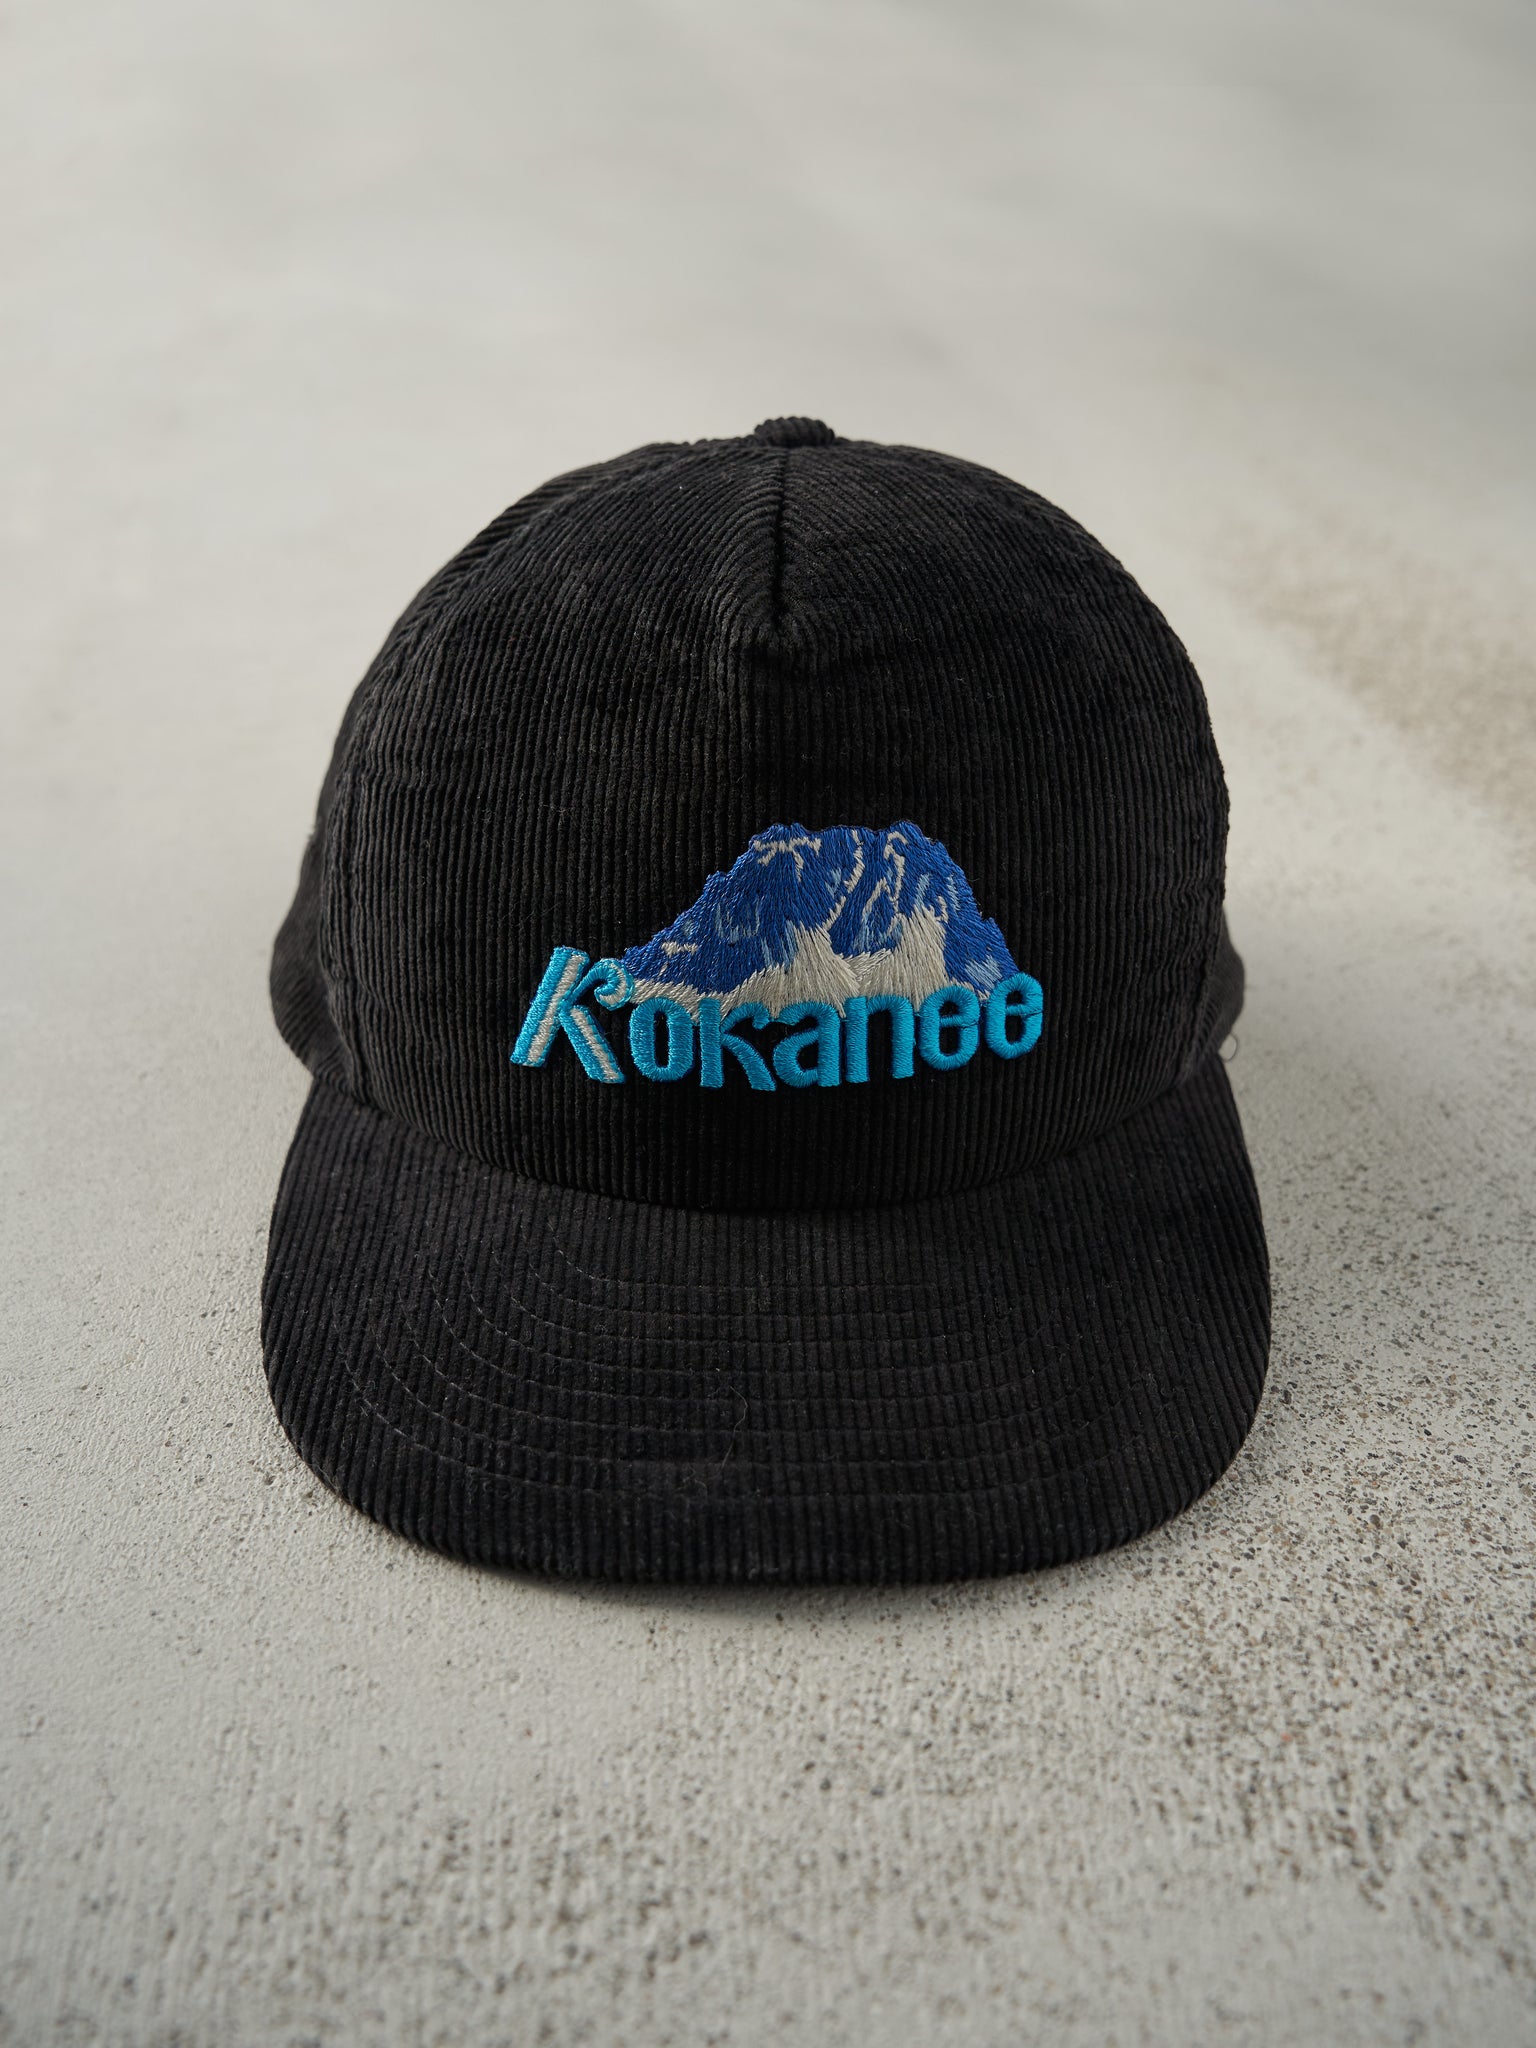 Vintage 80s Black Embroidered Kokanee Foam Corduroy Snapback Hat